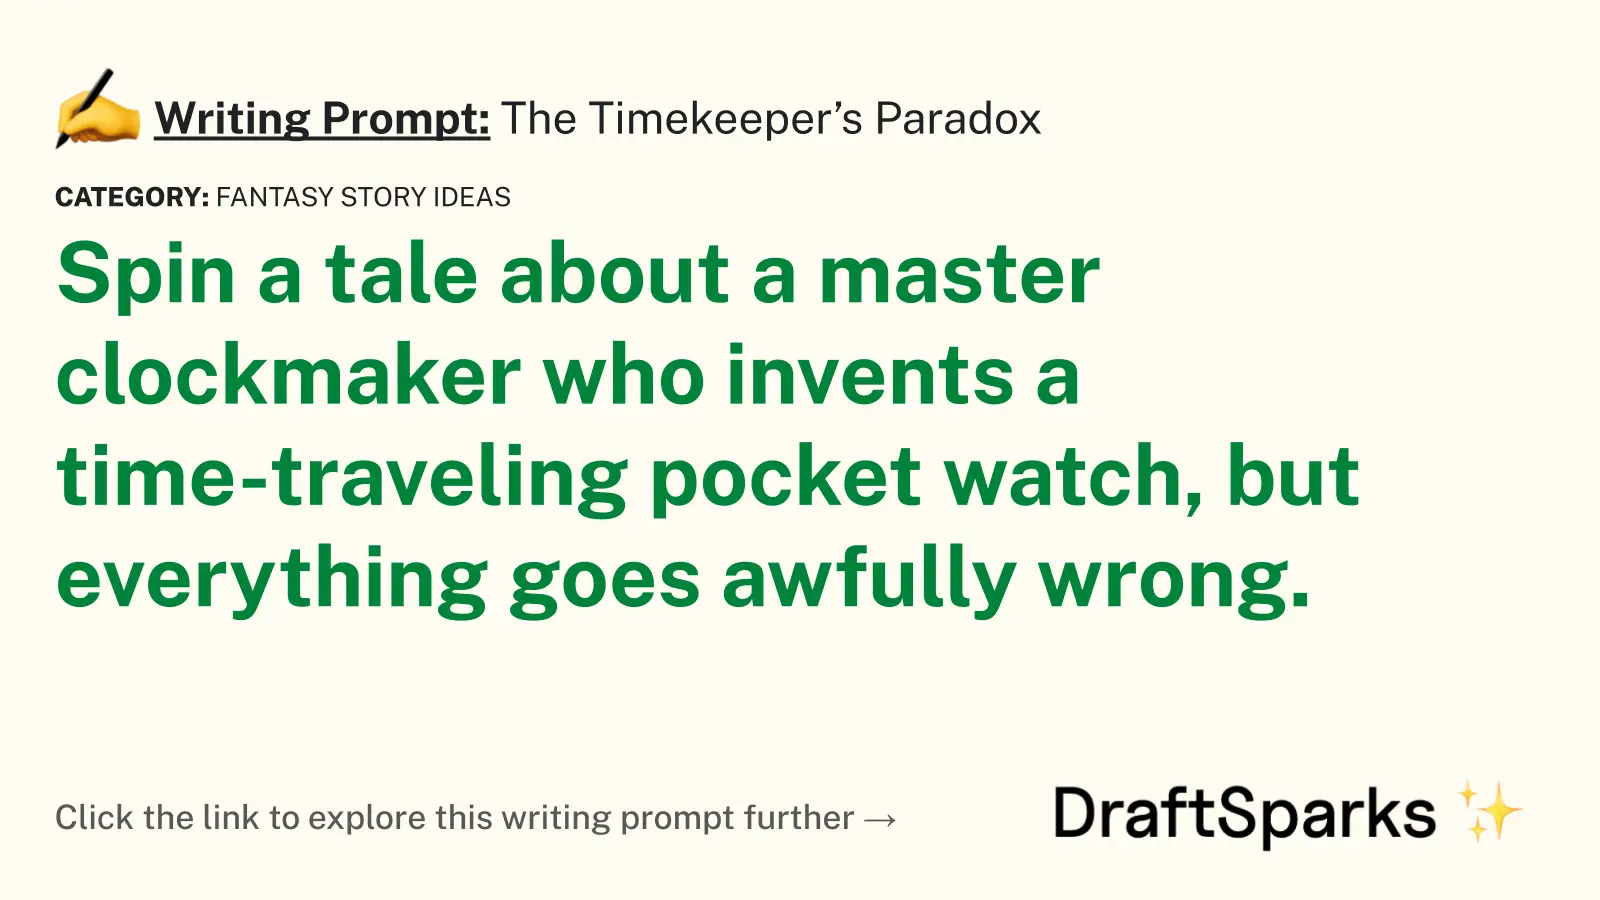 The Timekeeper’s Paradox